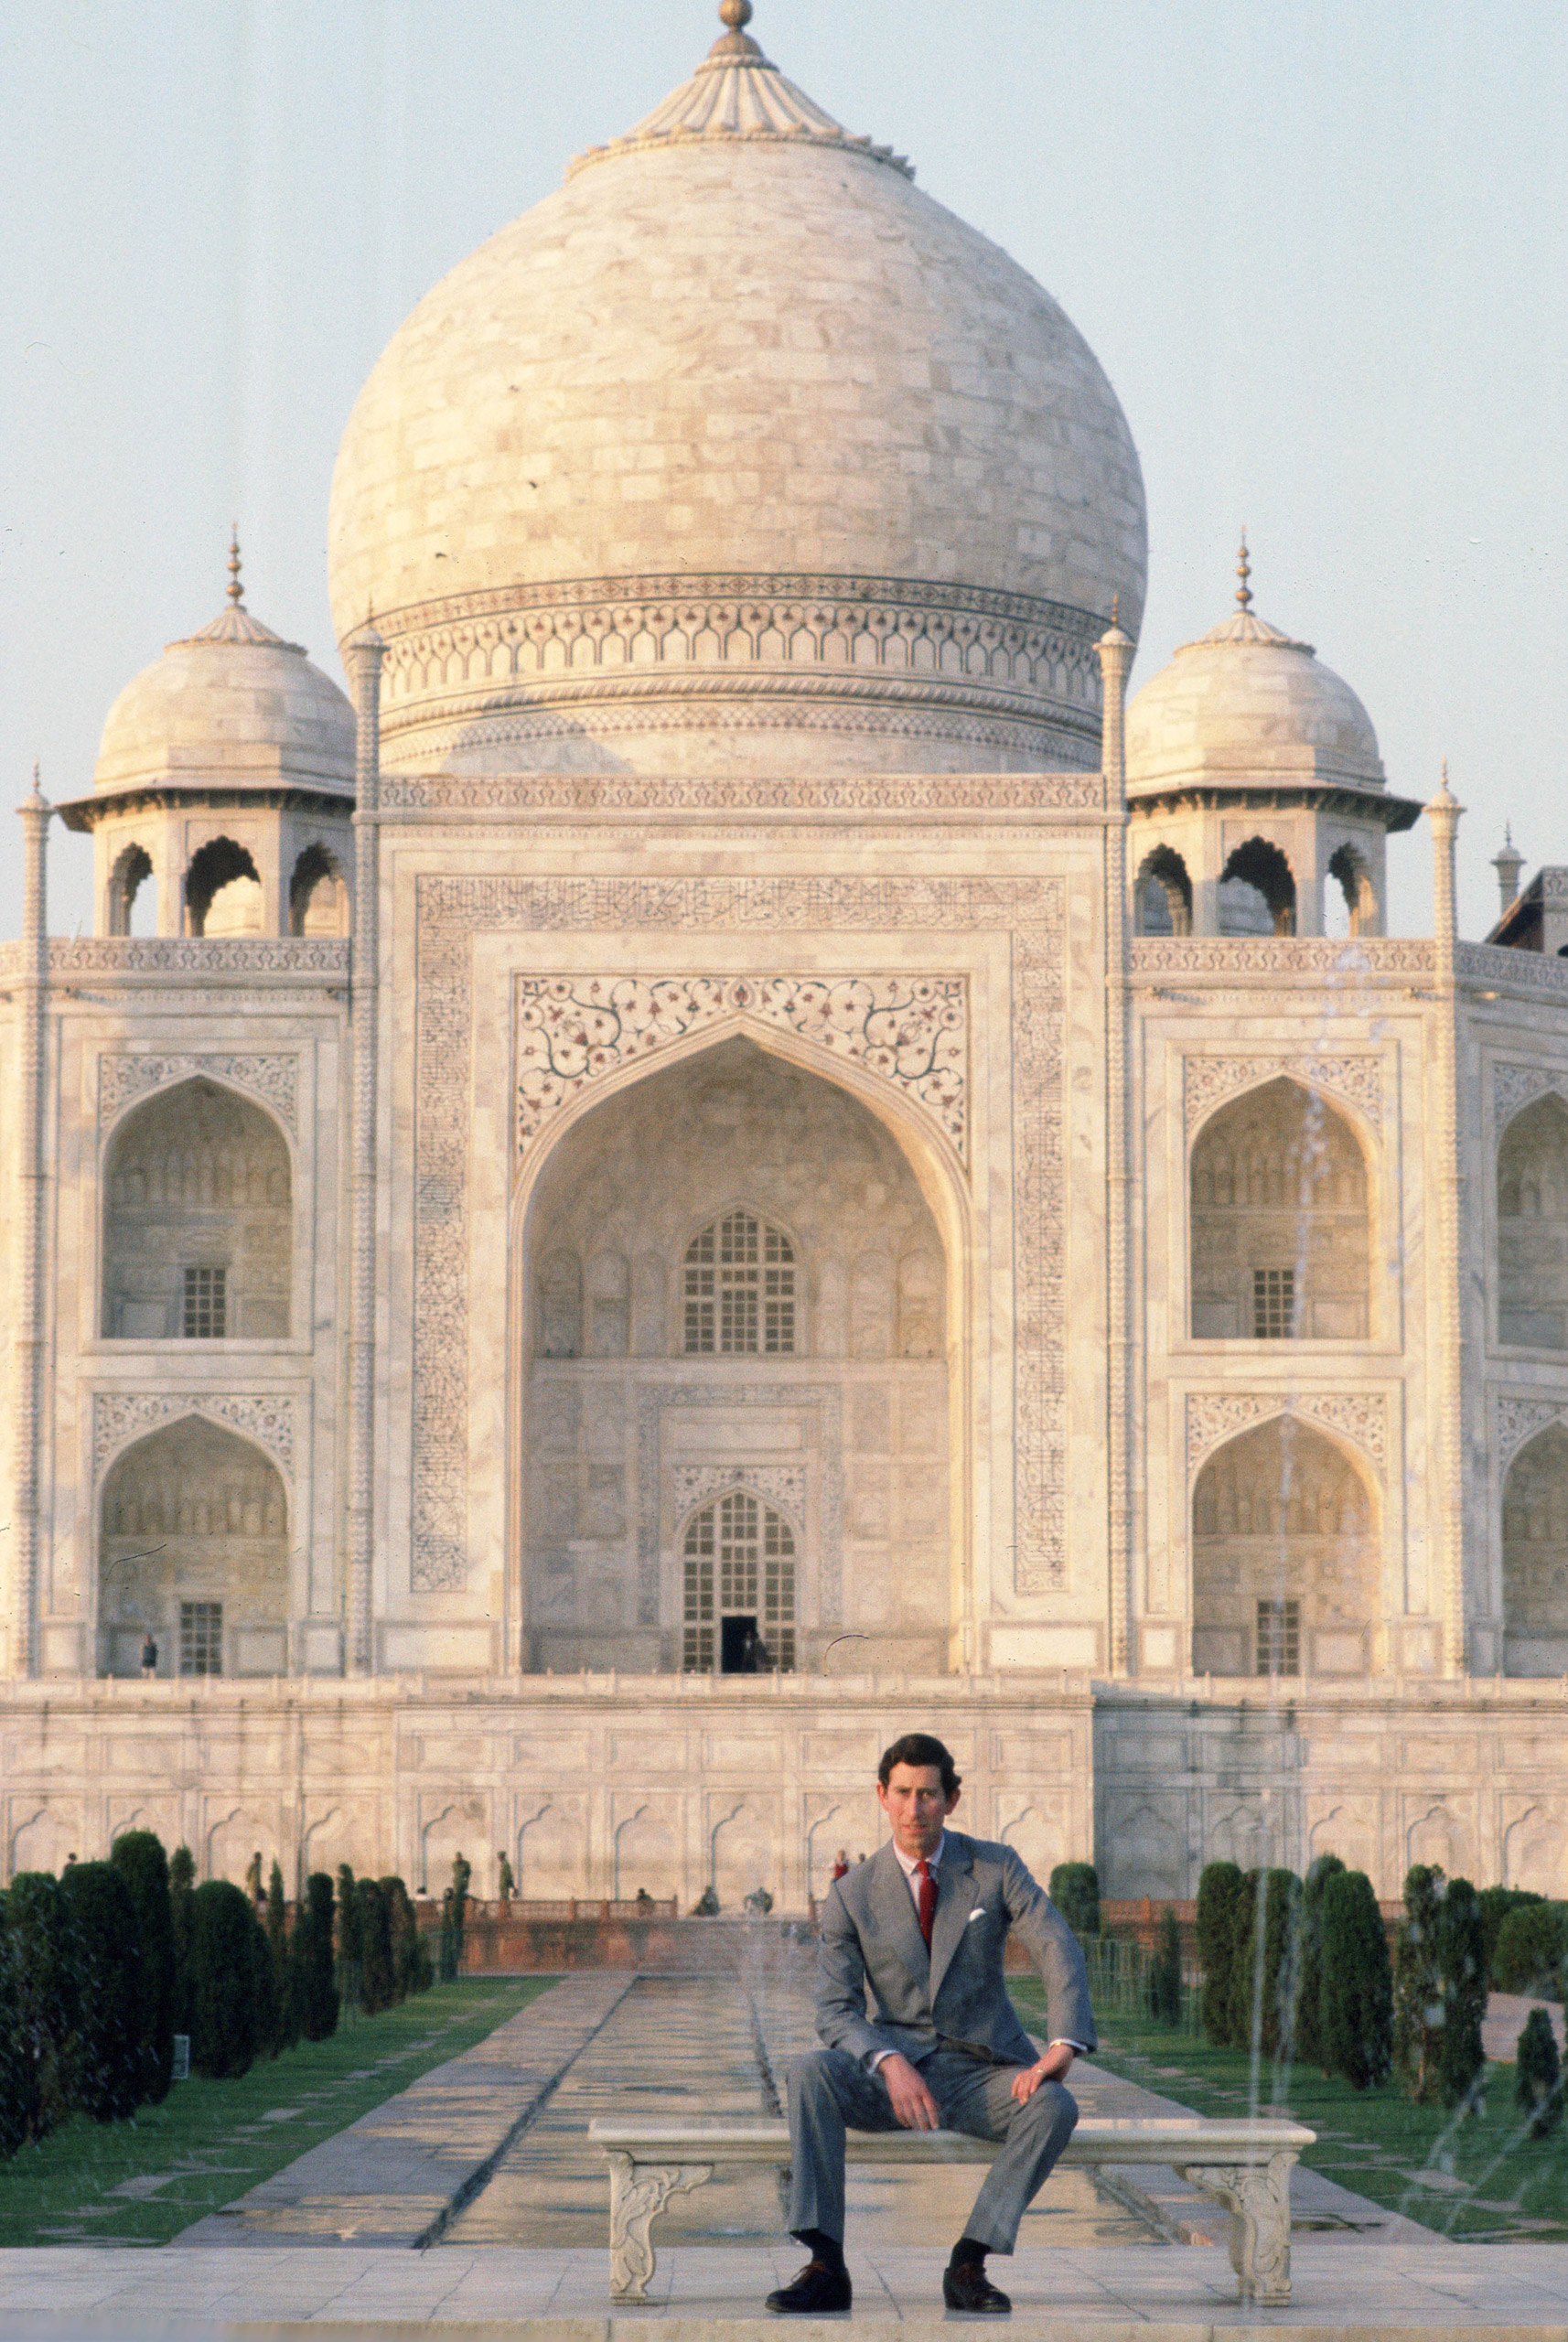 Prince Charles, Prince of Wales visits the Taj Mahal in India, Nov. 28, 1980. (Tim Graham—Getty Images)